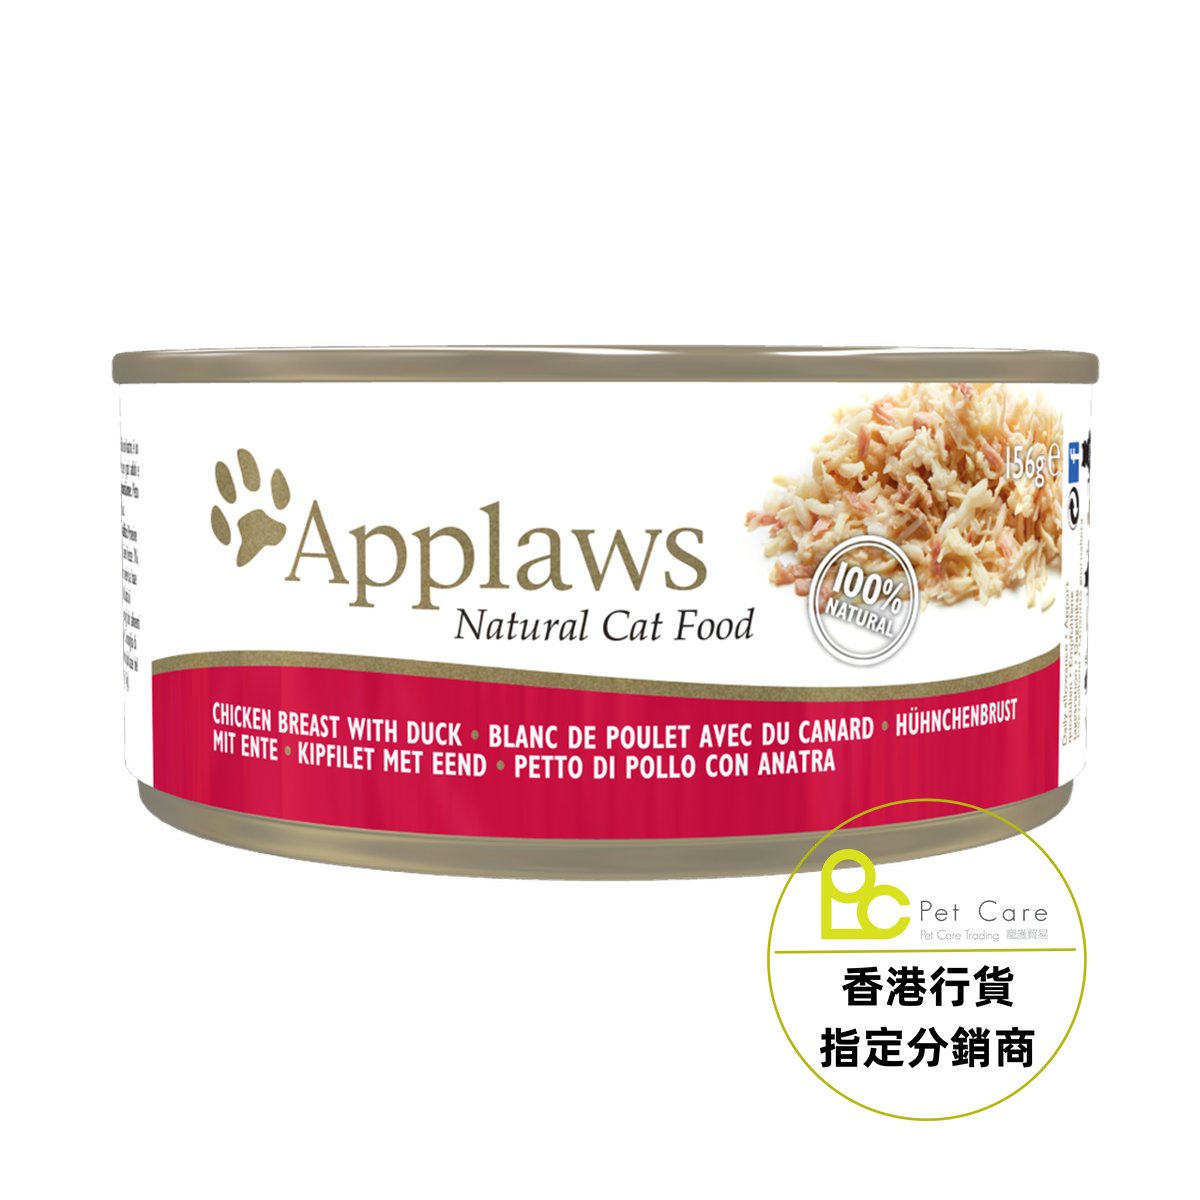 Applaws 全天然 156g 貓罐頭 - 雞胸 鴨肉 (大) - 幸福站